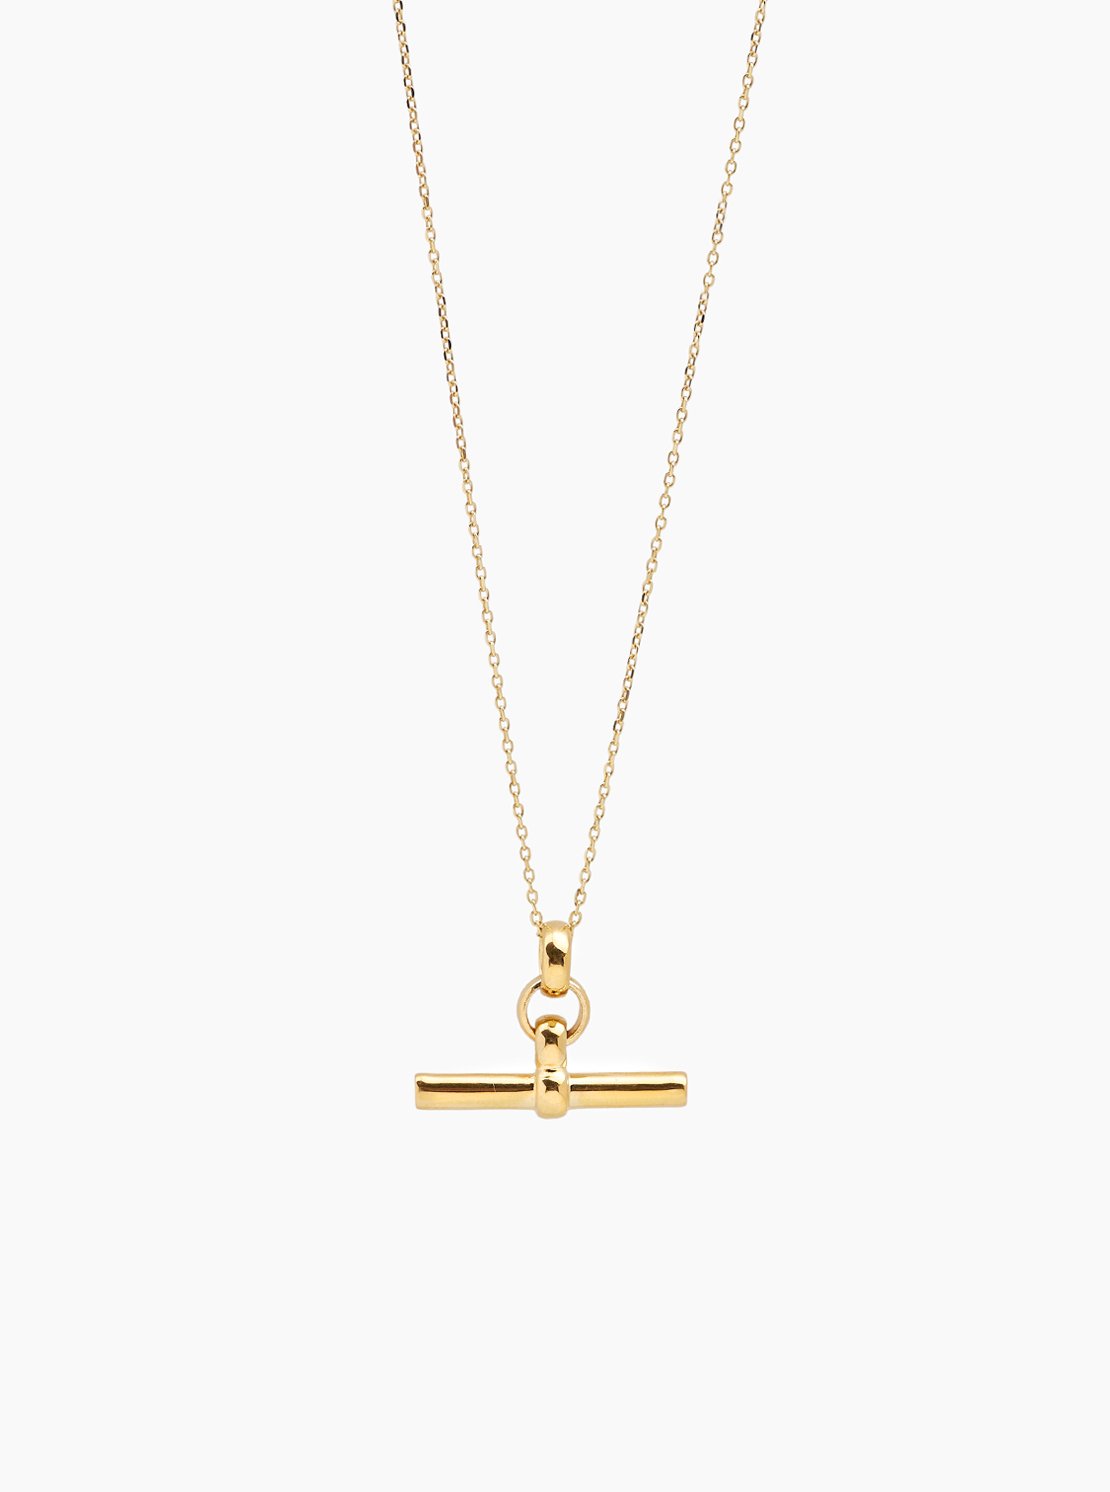 Tilly Sveaas T-Bar Necklace in Gold.jpg